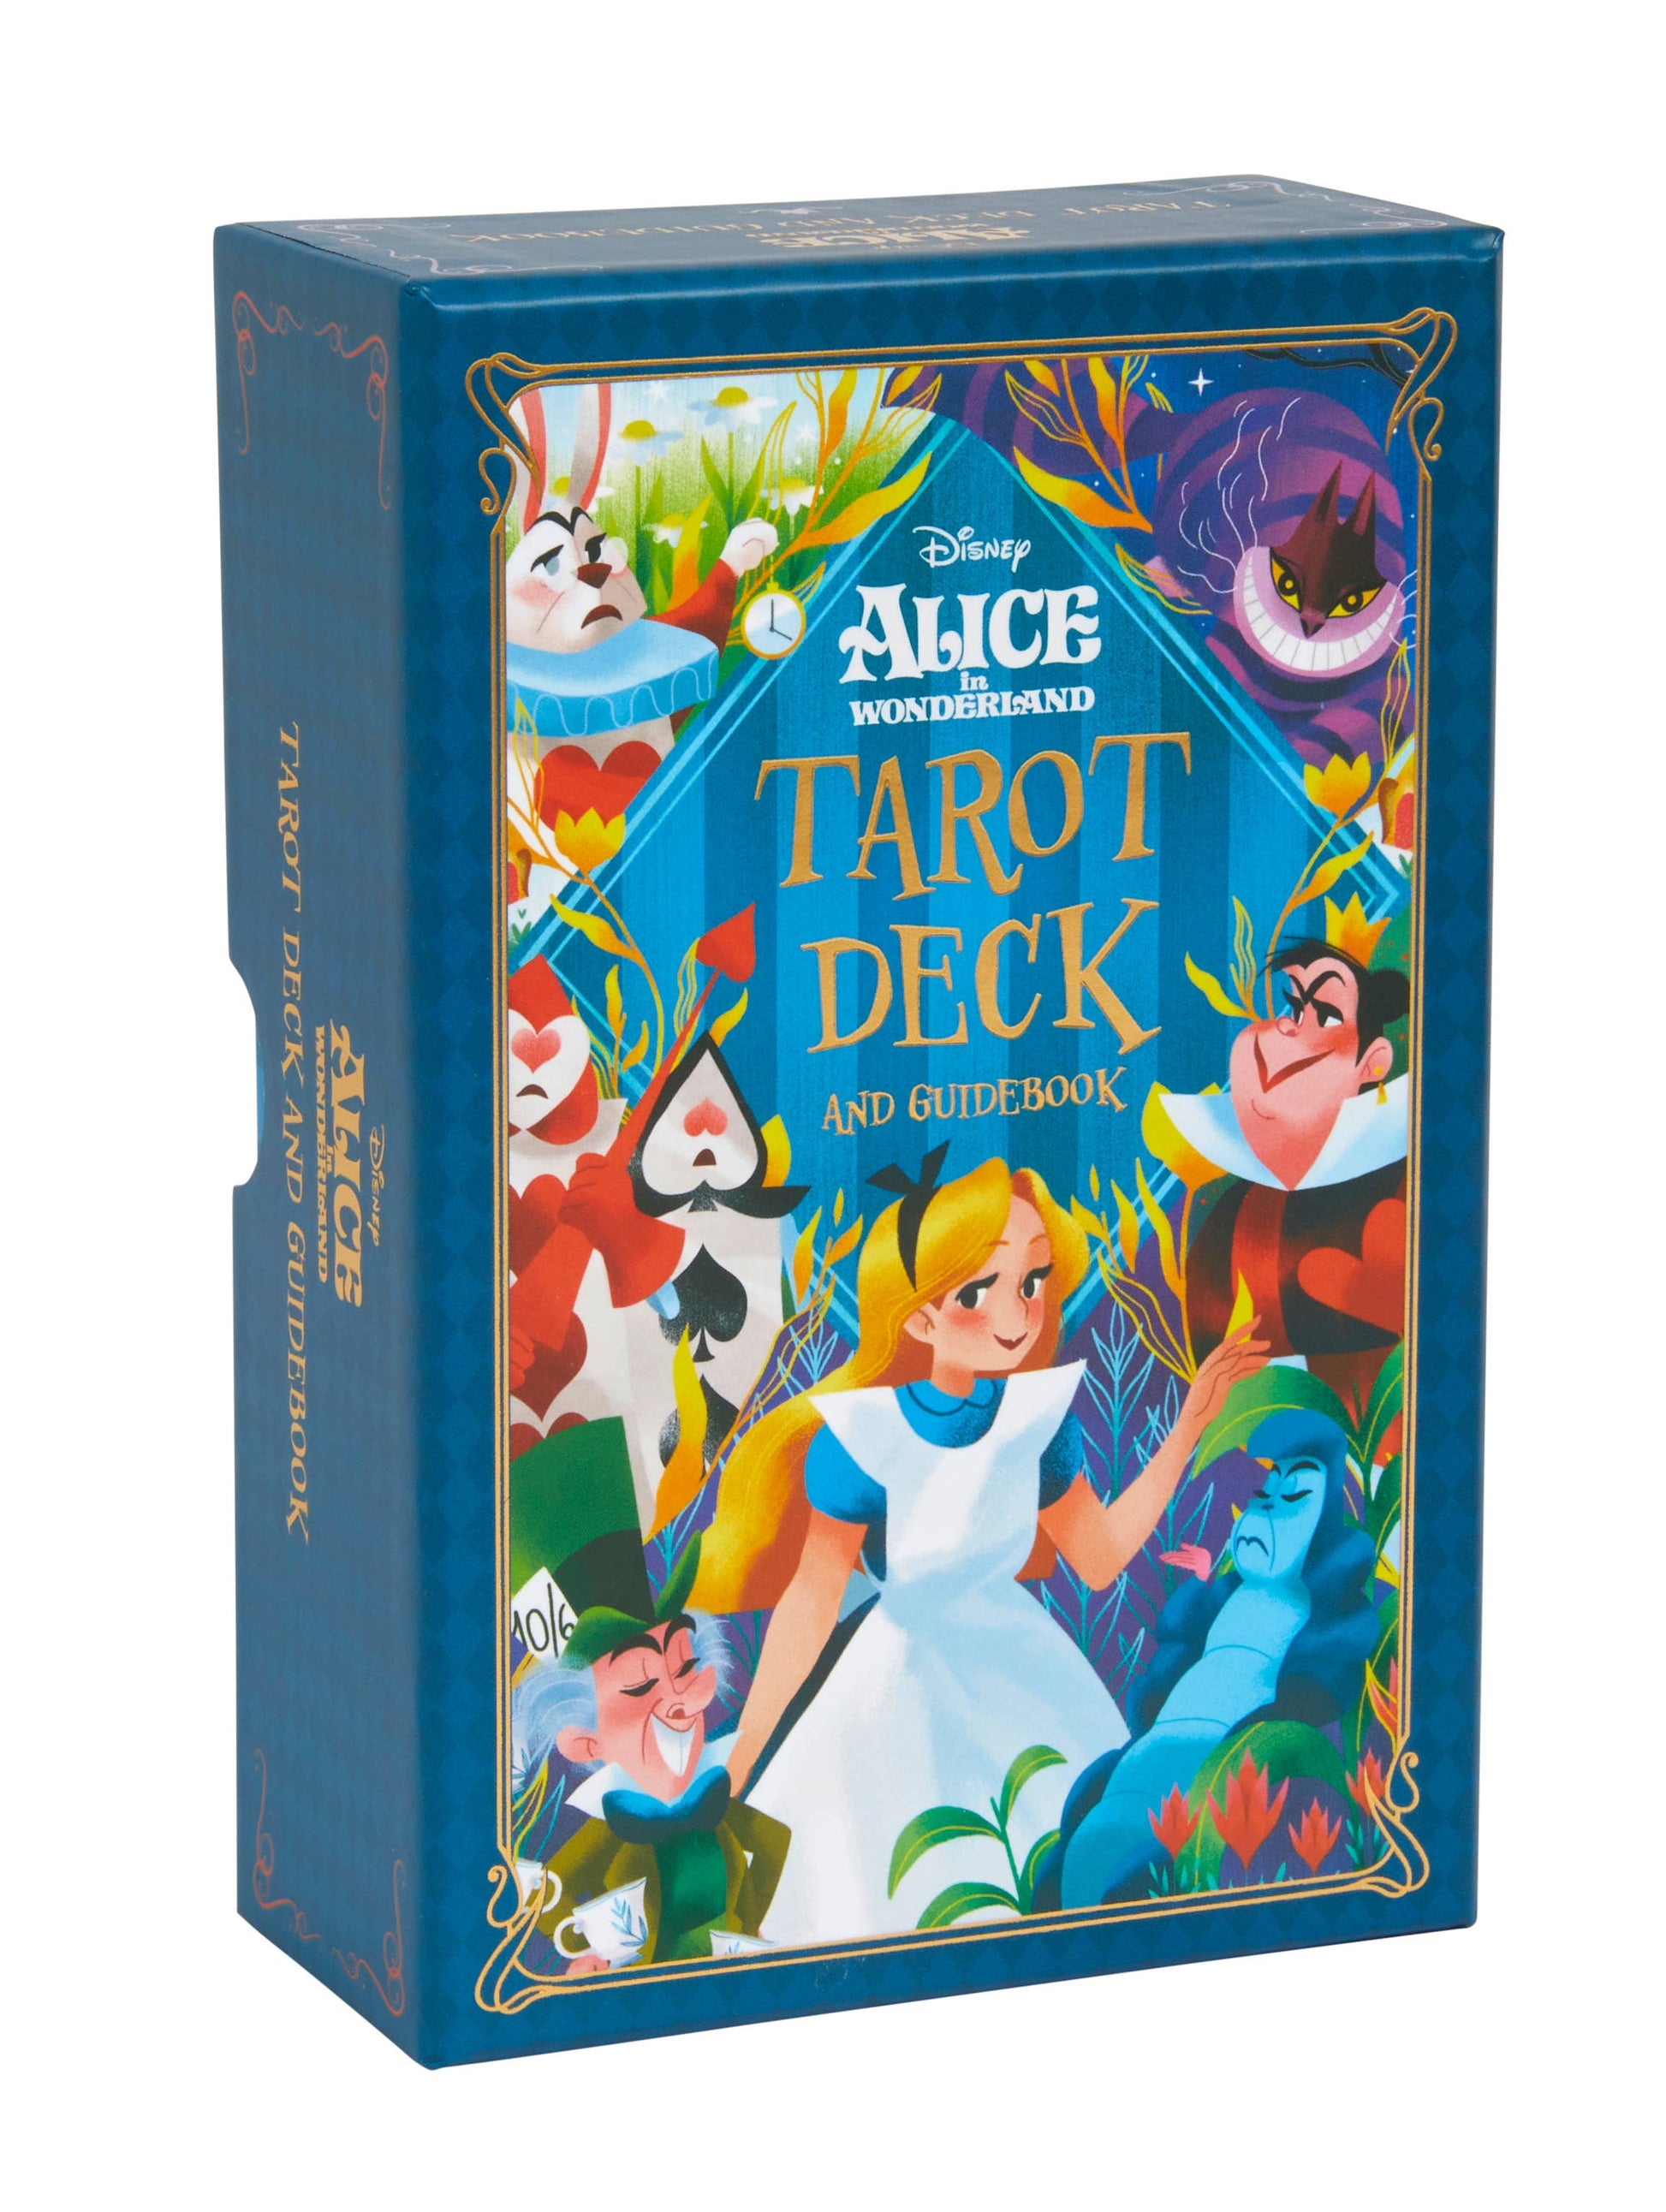 Disney's Alice in Wonderland Tarot Card Deck and Guidebook